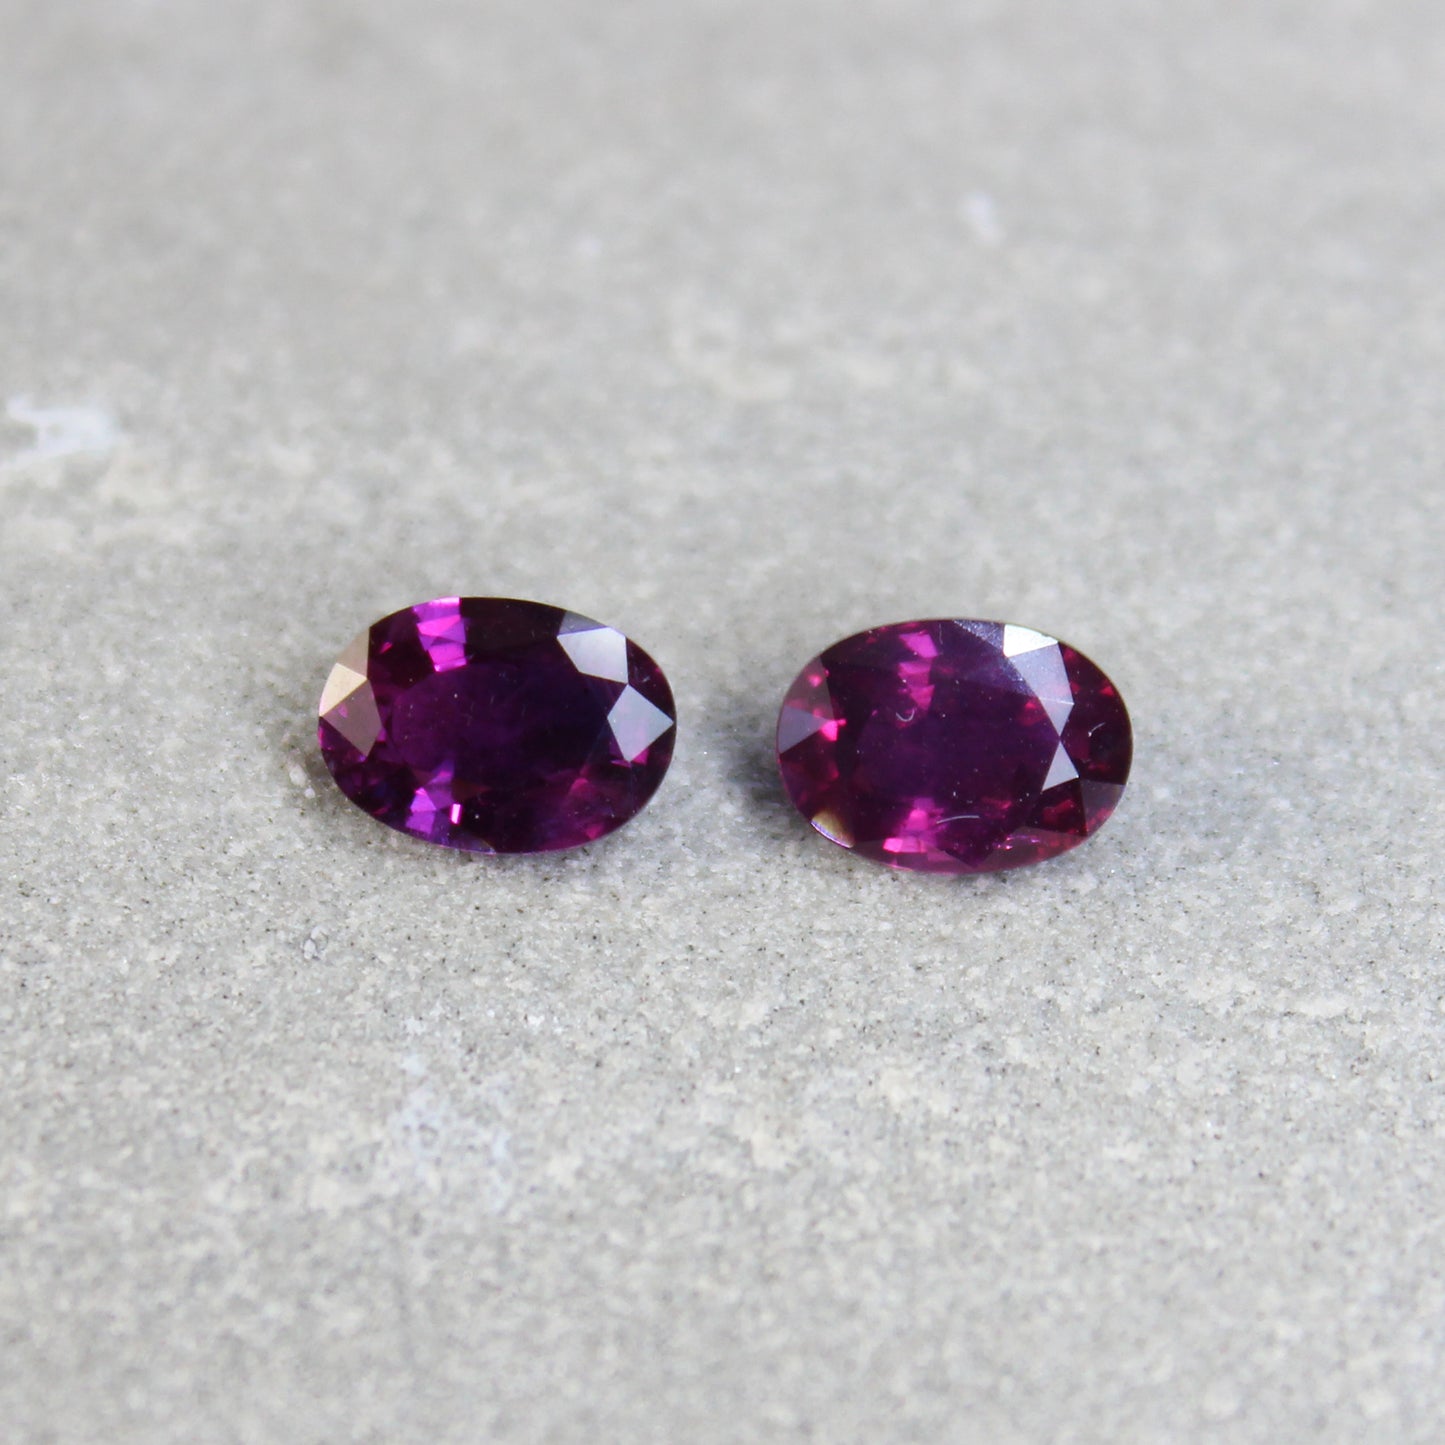 3.16ct Purple, Oval Sapphire Pair, Heated, Sri Lanka - 7.9 x 5.7mm